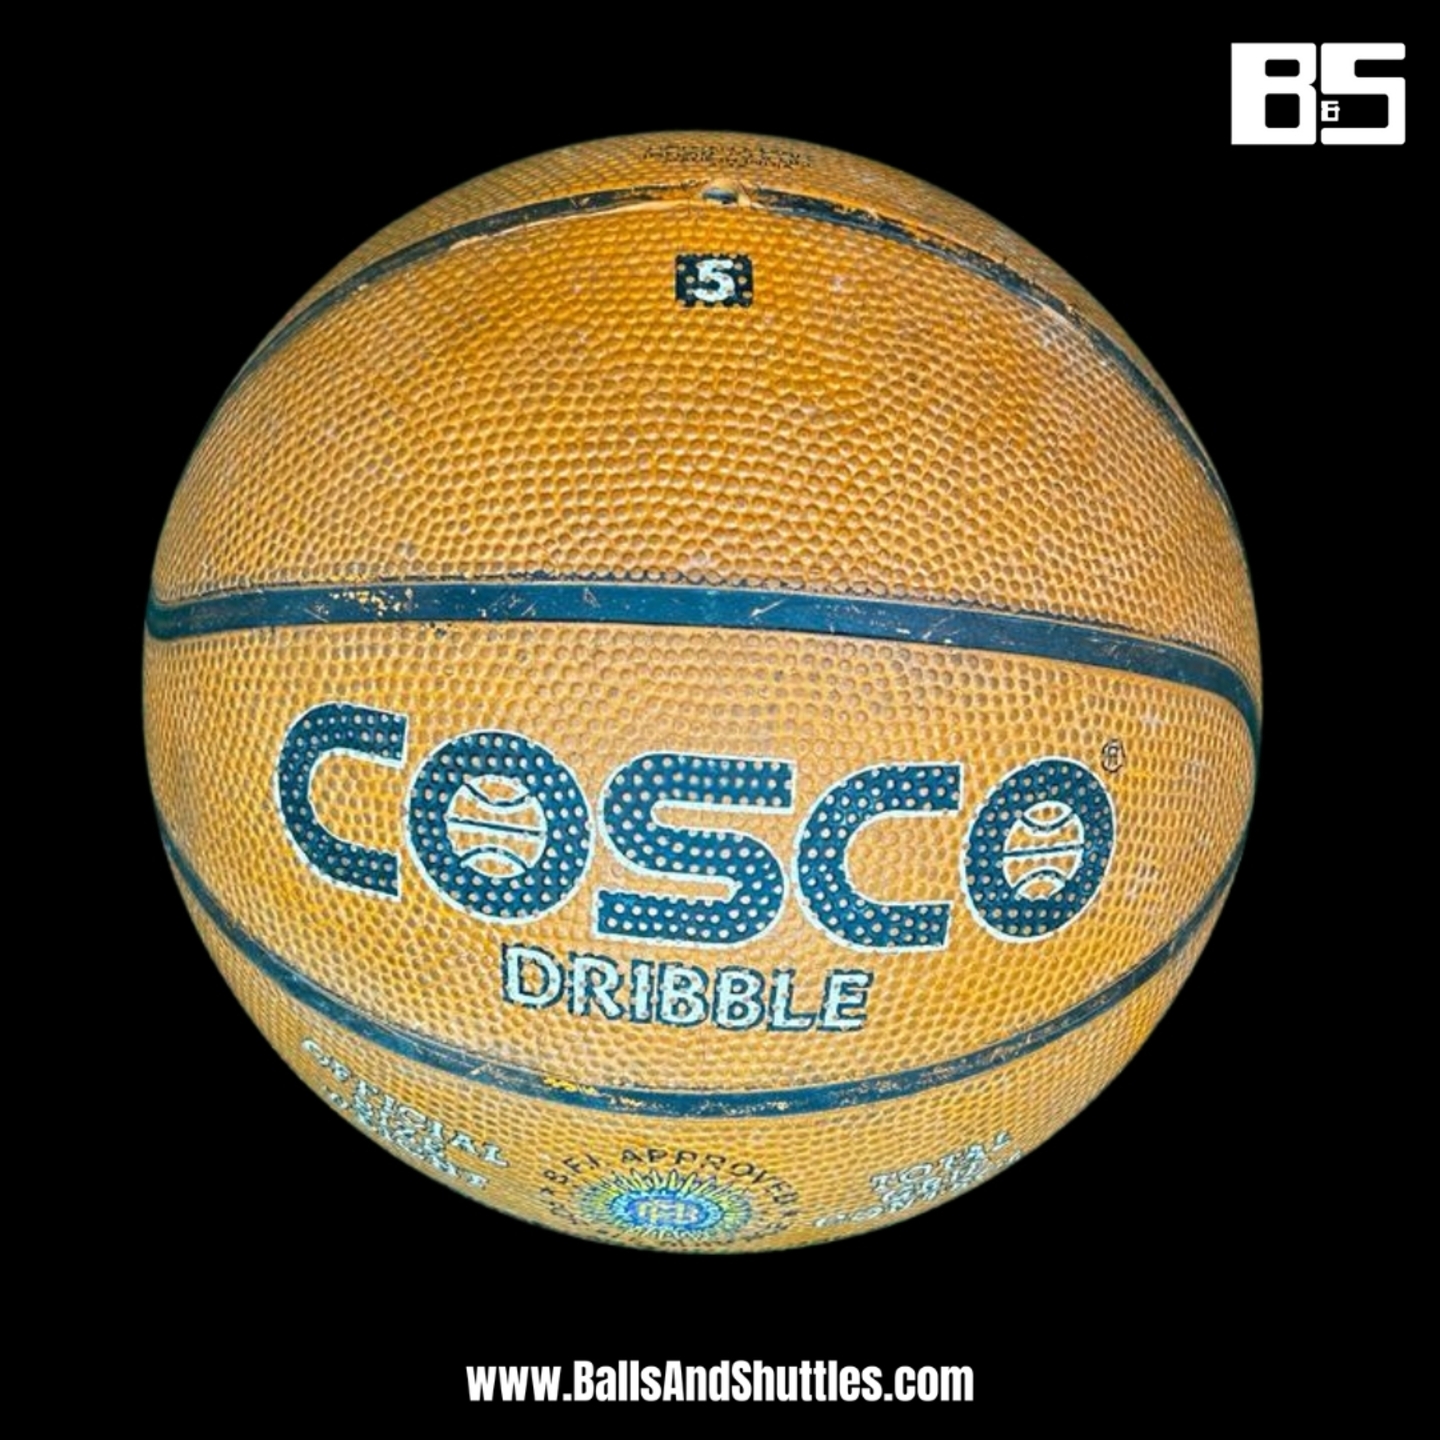 USED COSCO DRIBBLE BASKETBALL | COSCO SIZE 5 BASKETBALL | COSCO BASKETBALL